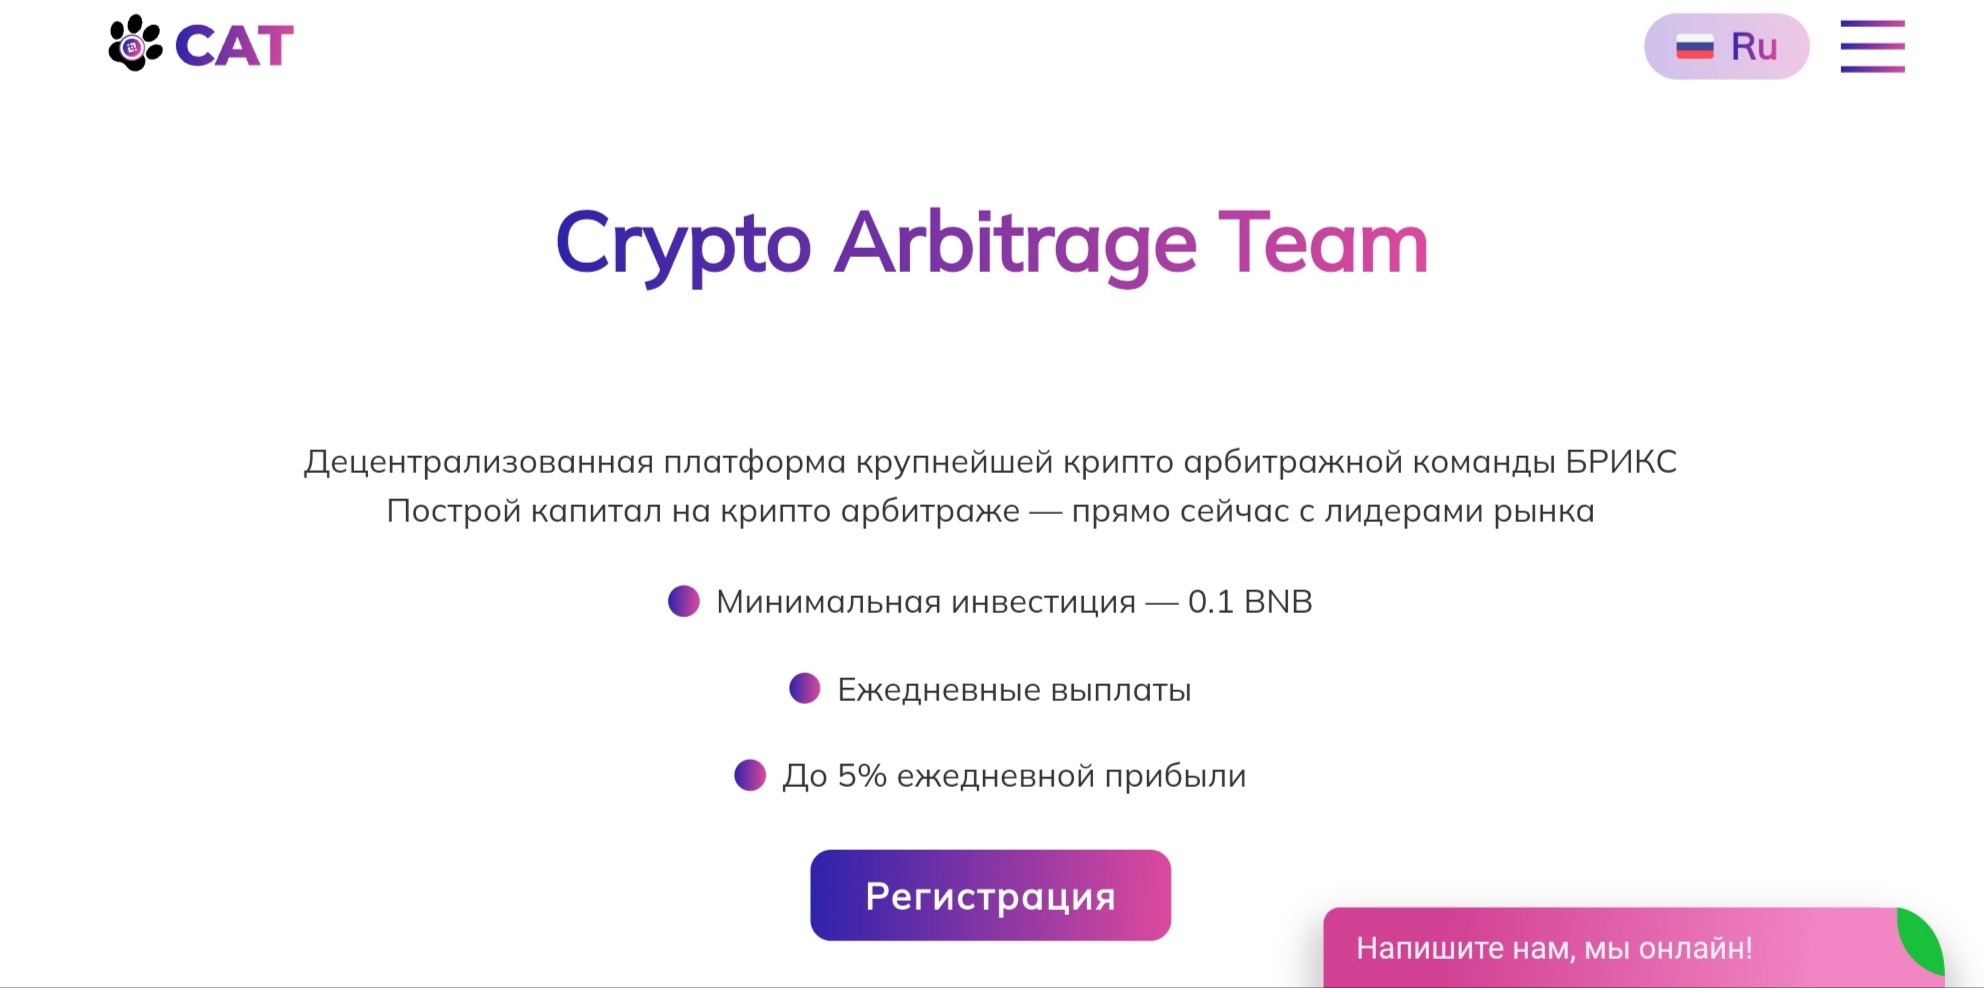 Crypto Arbitrage Team сайт обзор